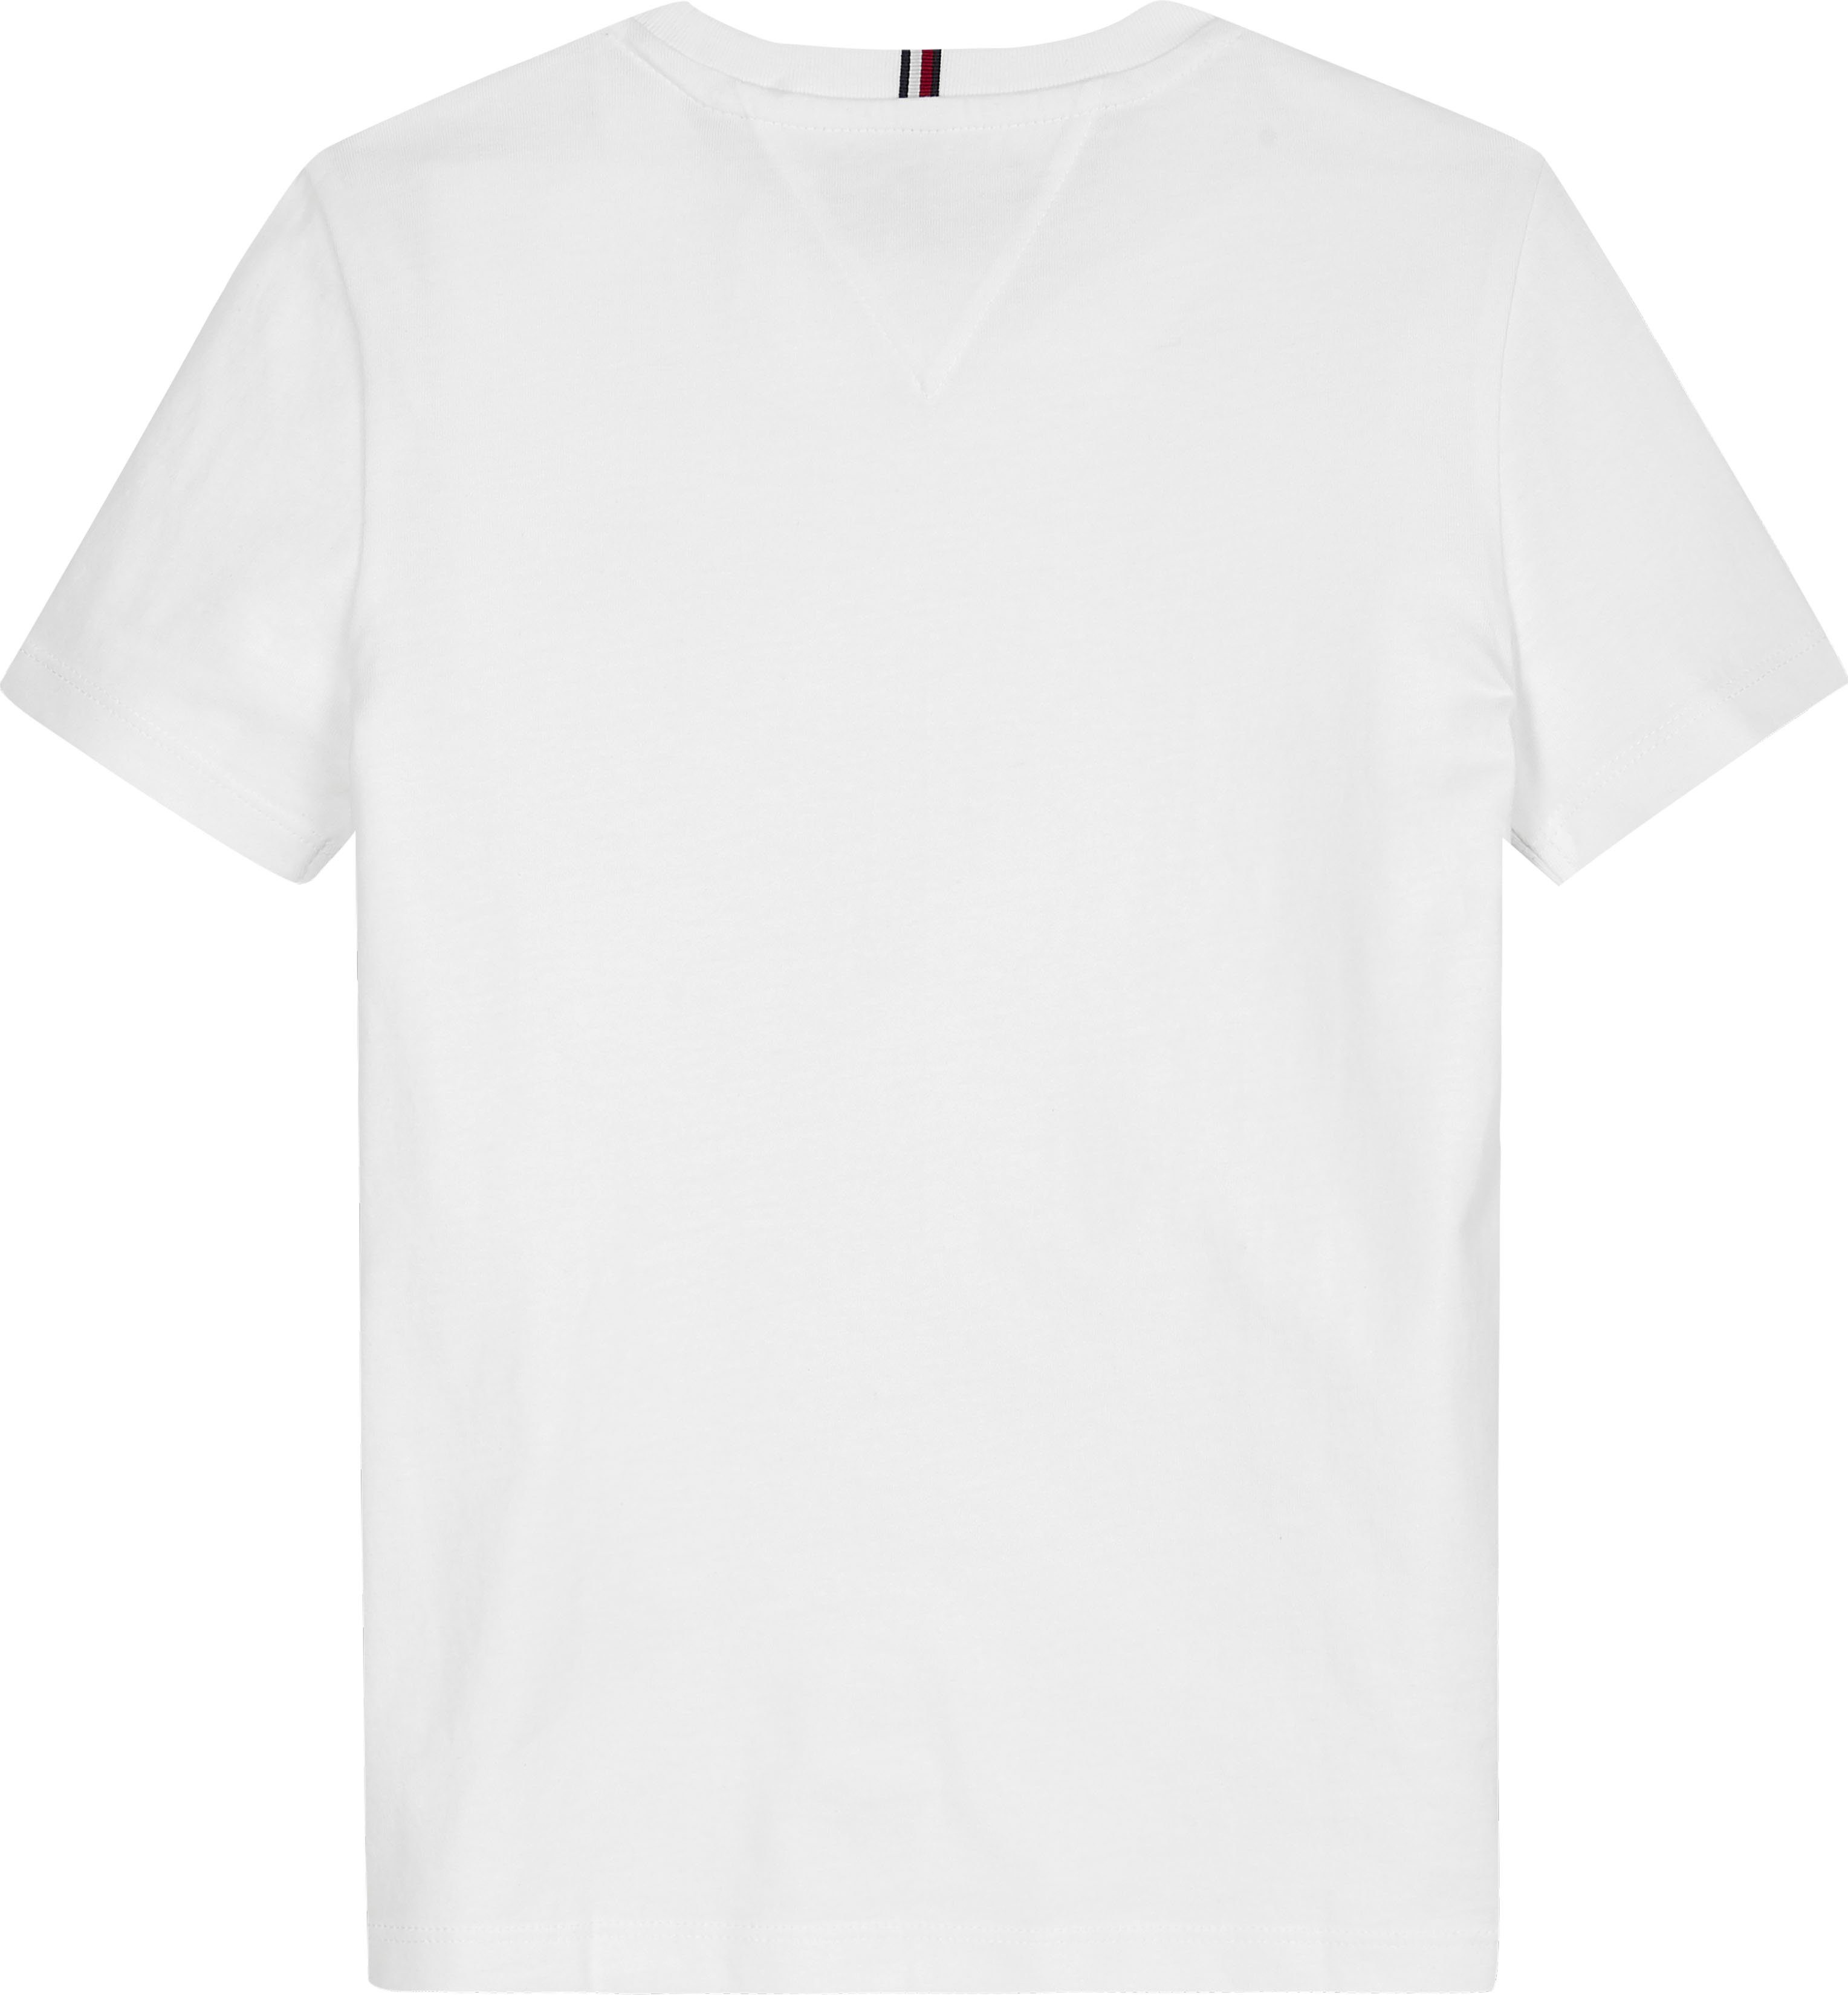 ESSENTIAL Tommy Hilfiger TEE T-Shirt